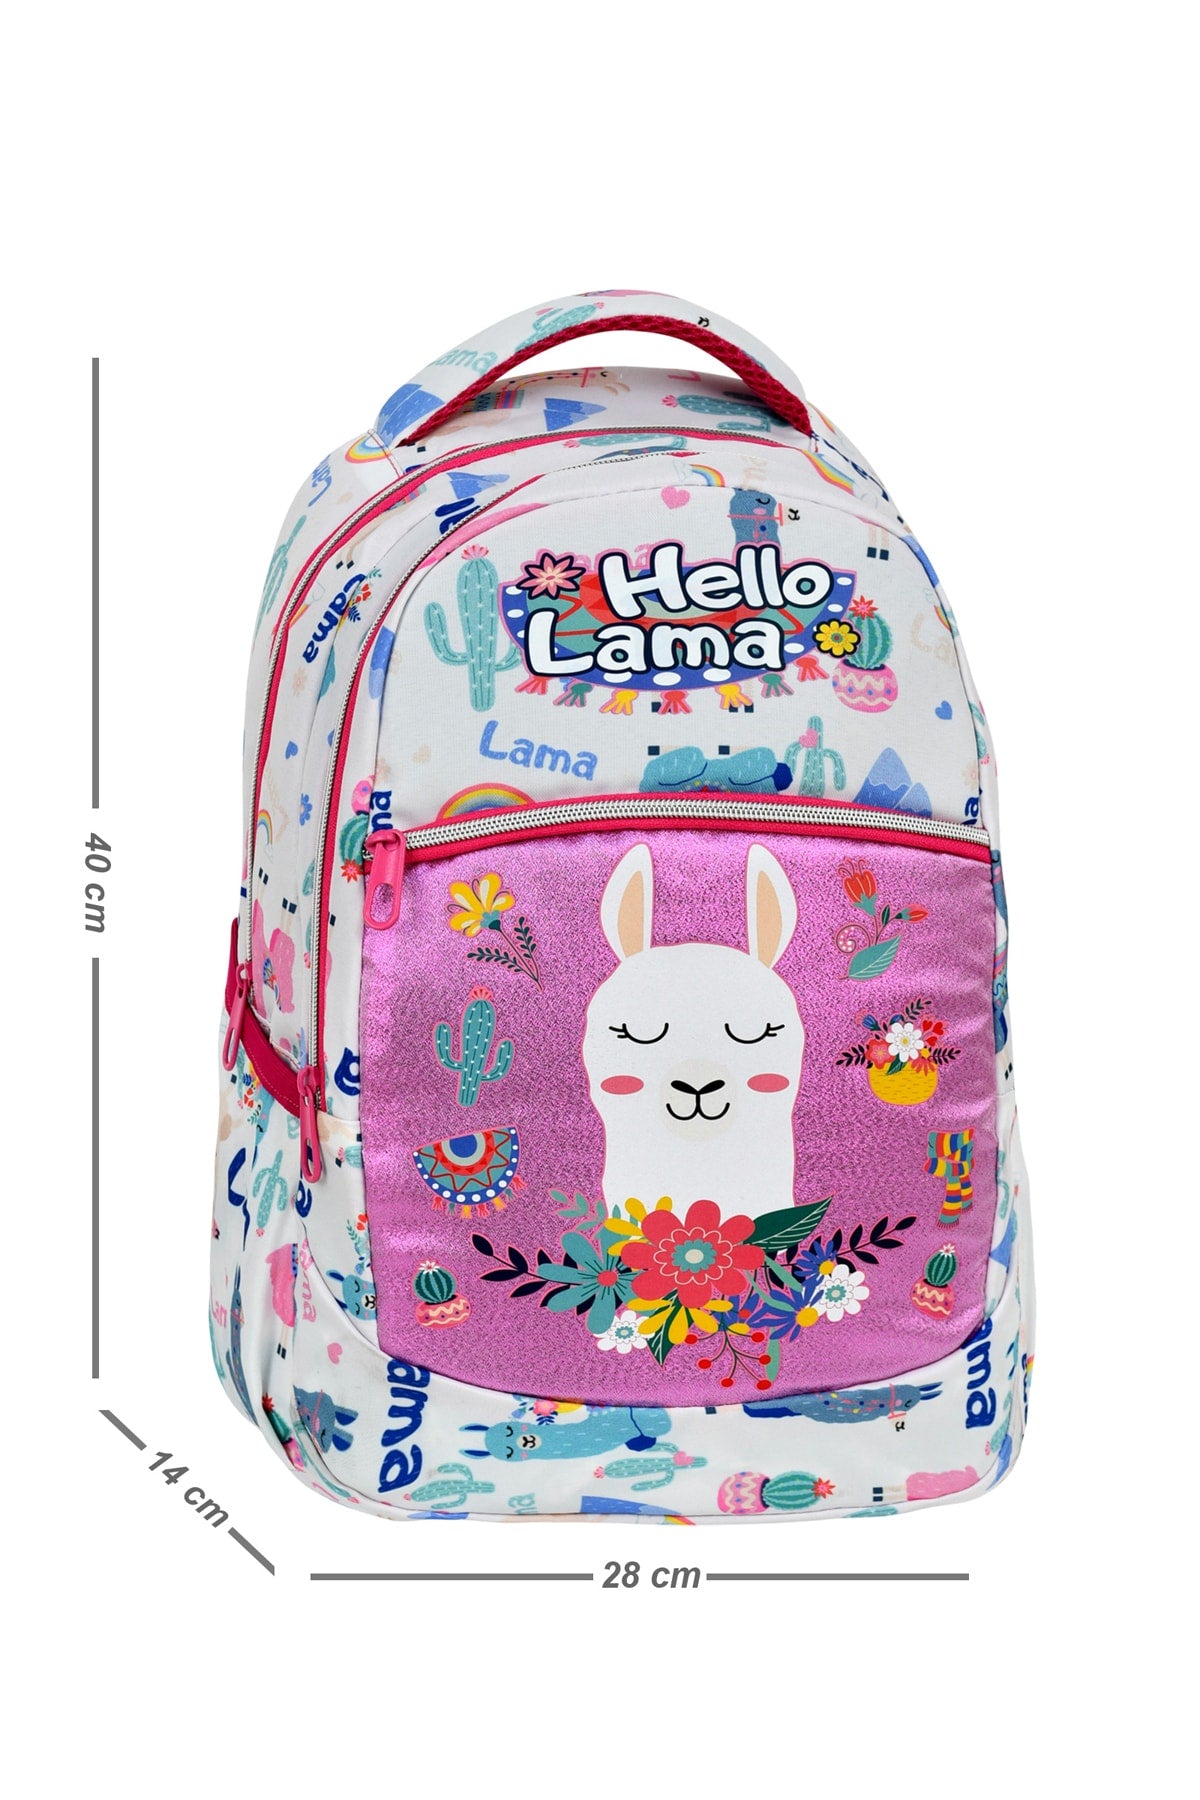 Set of 3, Llama Patterned Patterned Primary School Bag Lunch Box Pen Holder